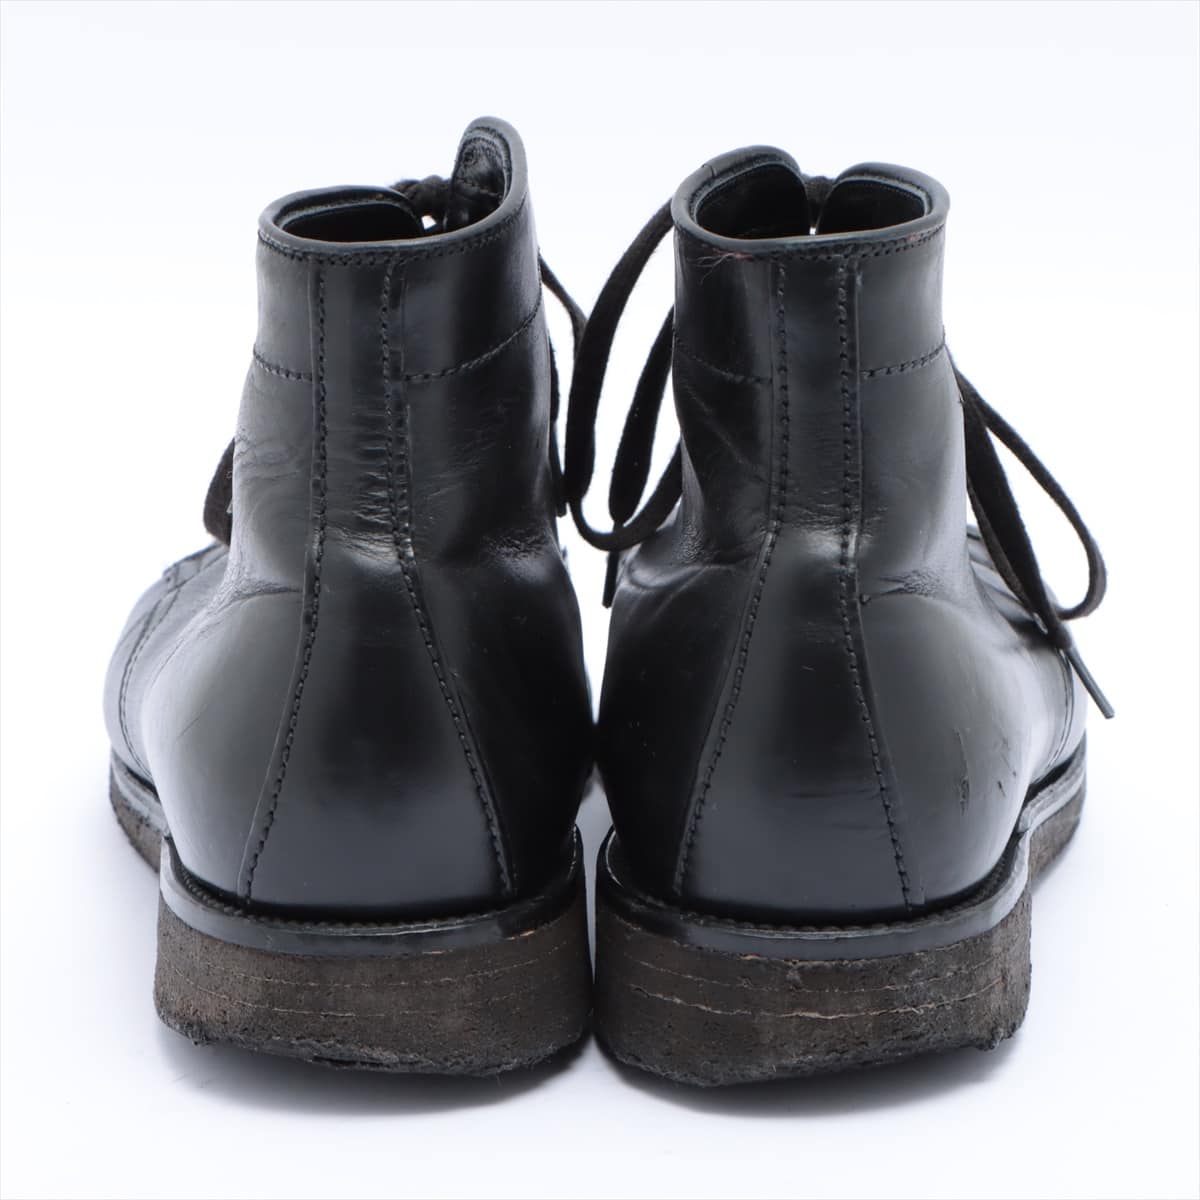 Alden Leather Boots 8 Men's Black 45491H chrome excel crepe sole Tanker